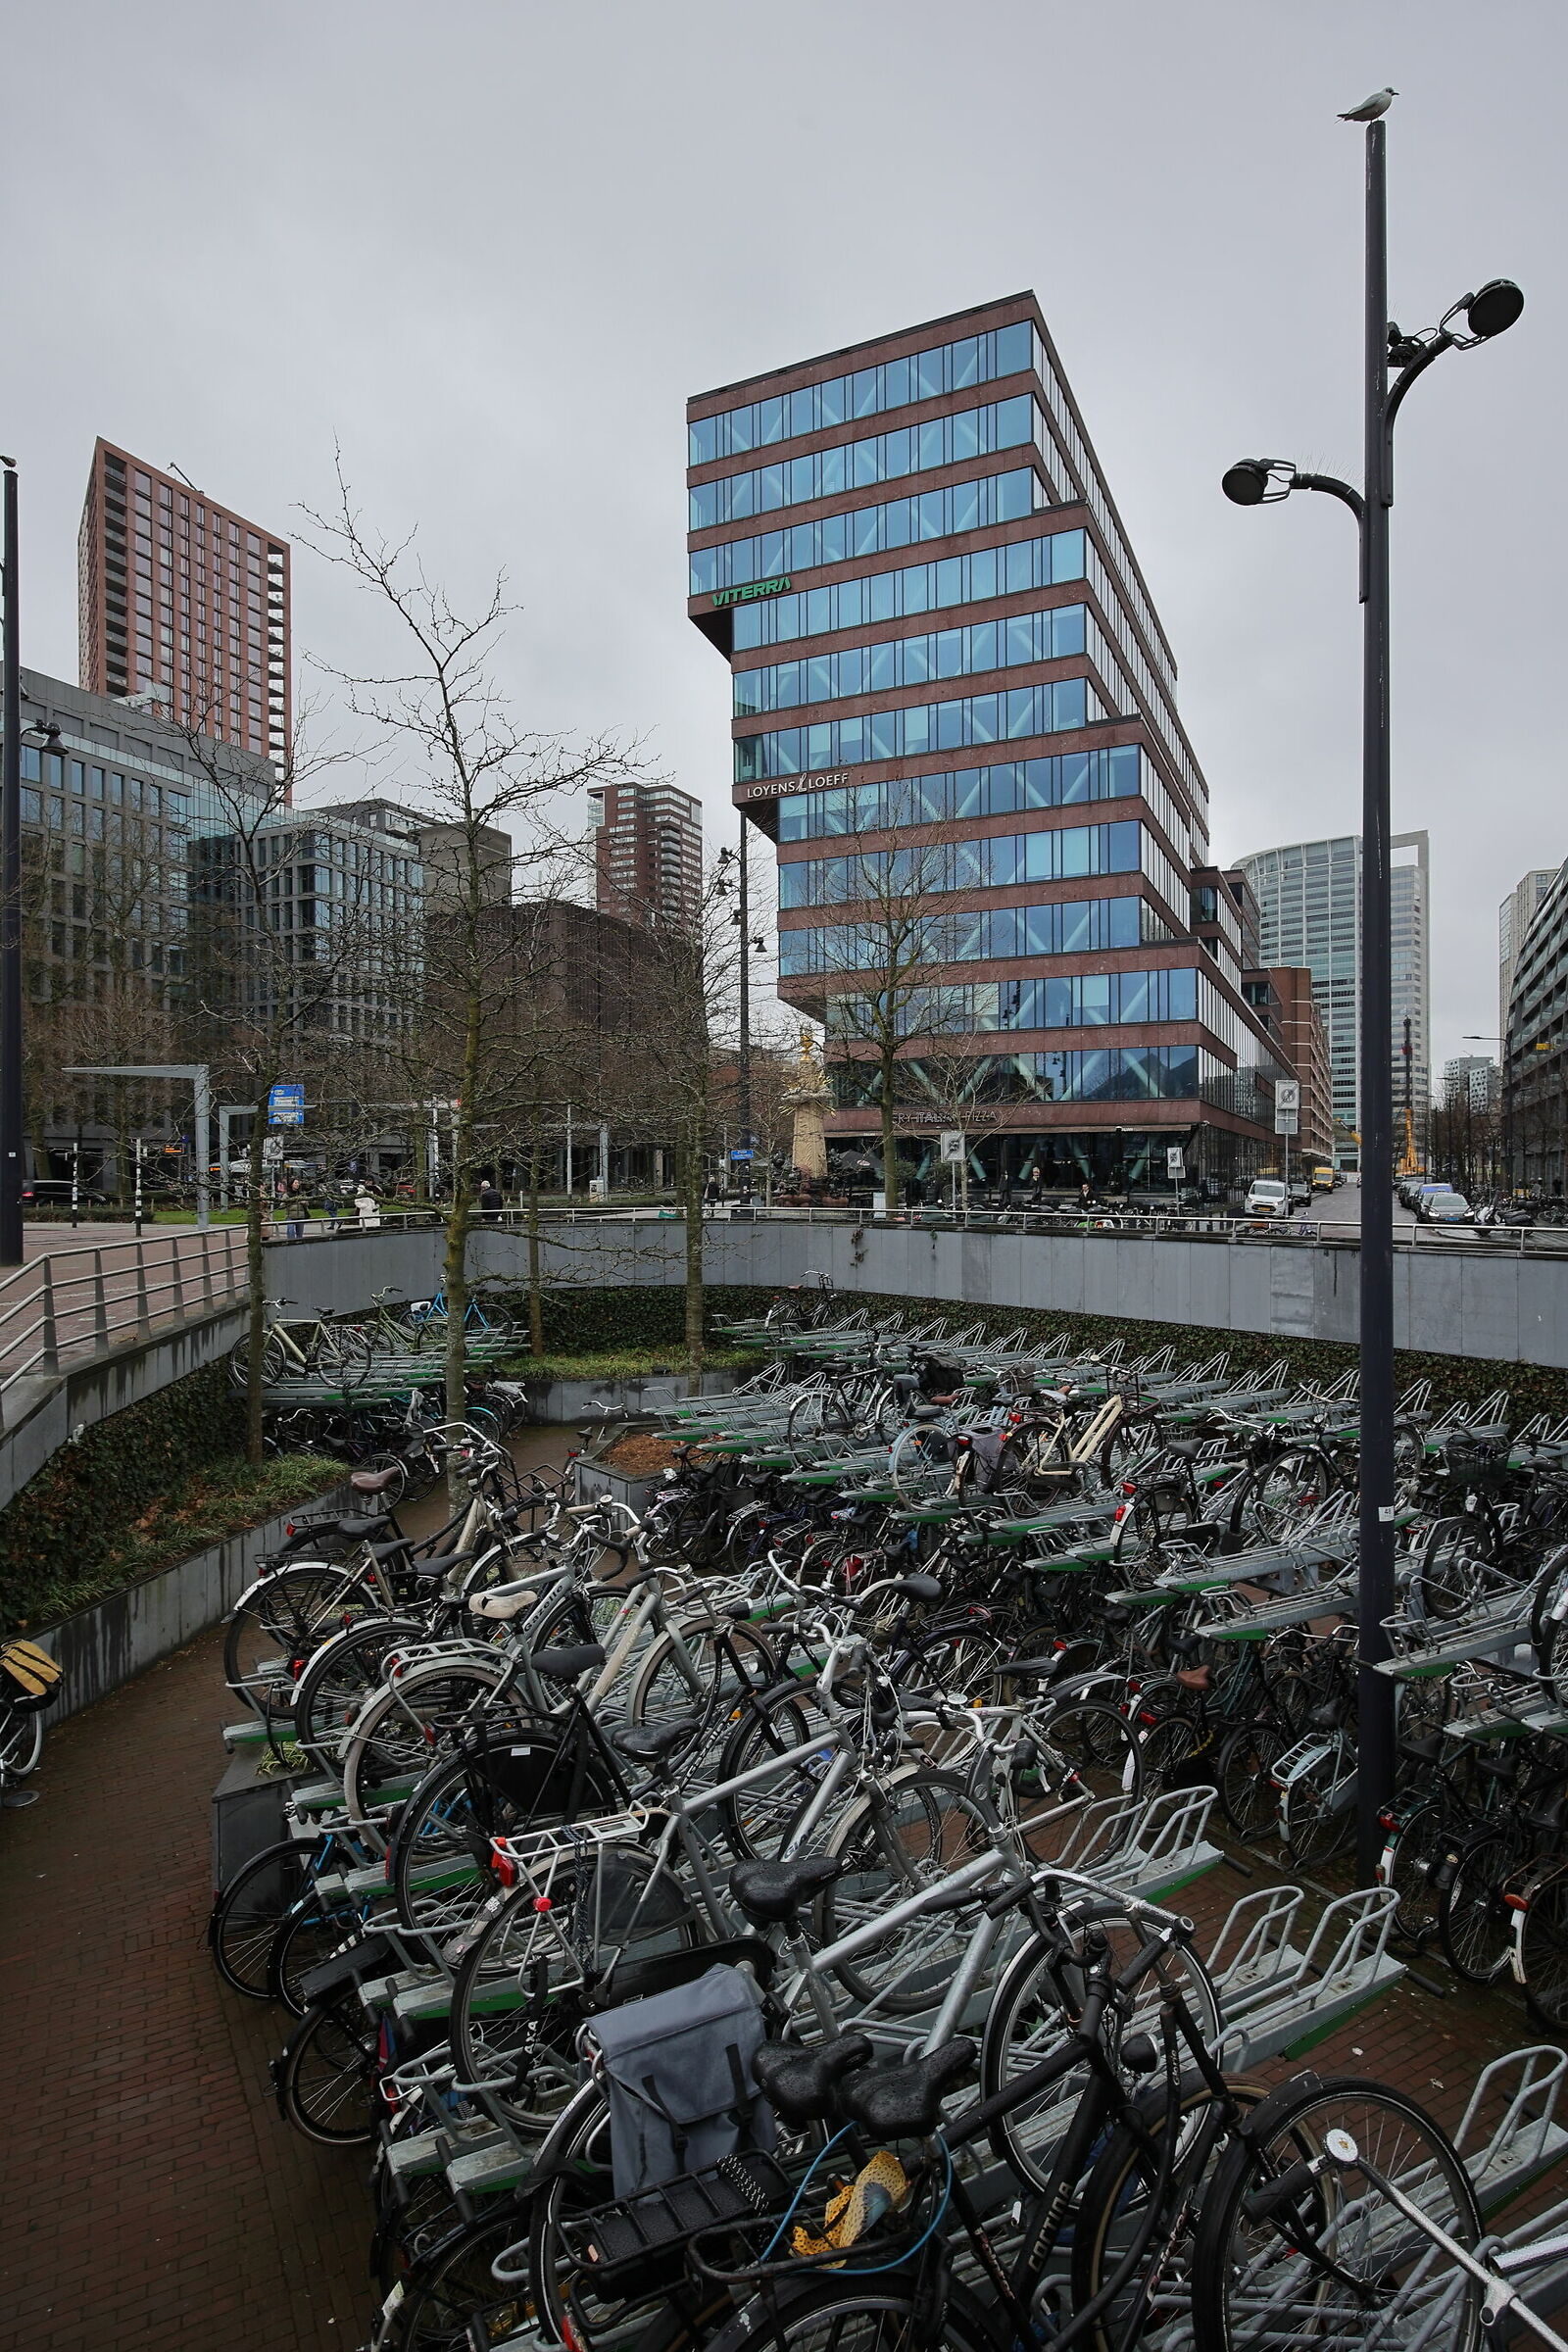 Rotterdam - Architettura moderna e bici...